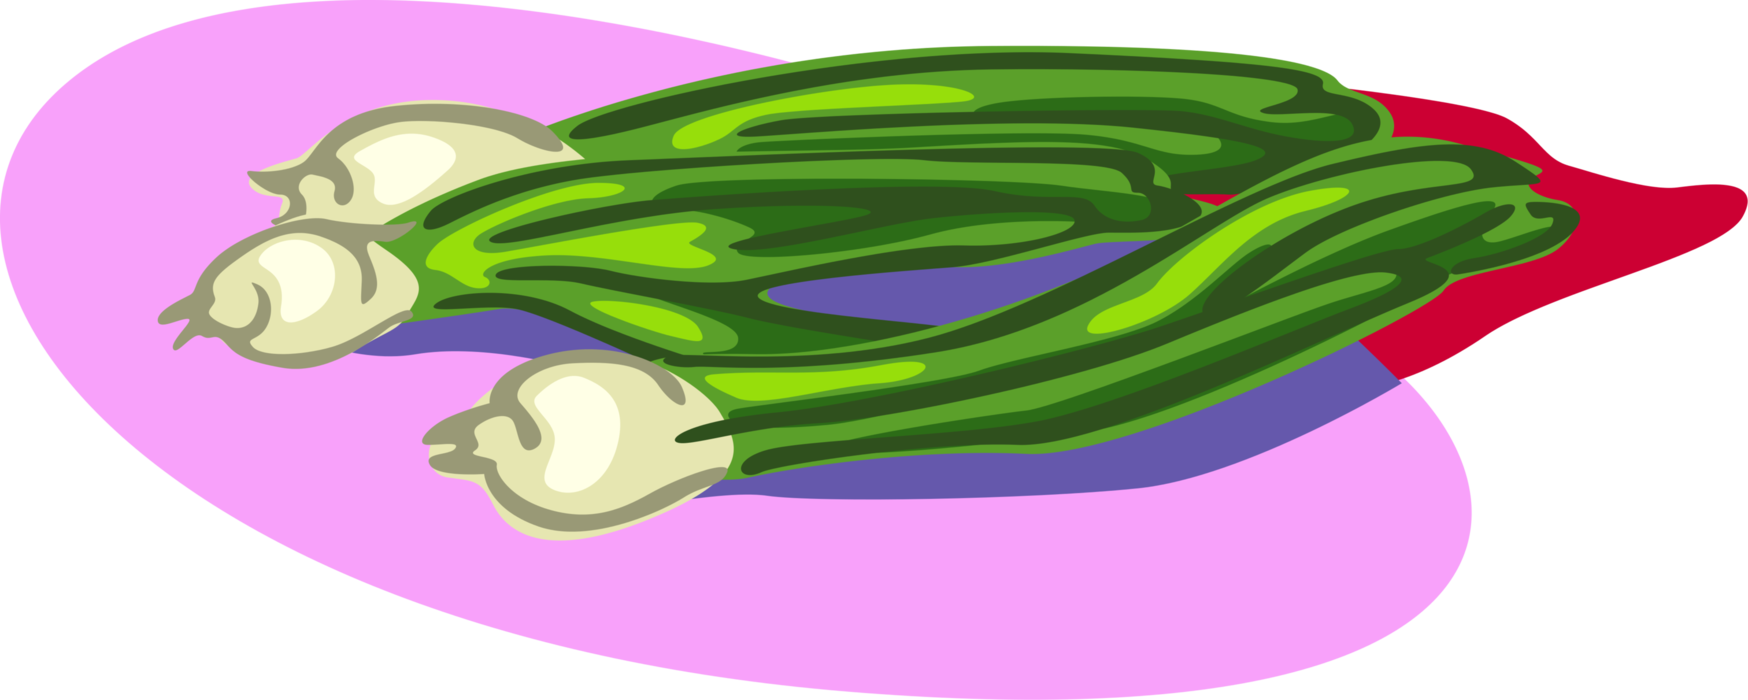 Vector Illustration of Scallion Onion Shallot Vegetable Eaten Raw or Cooked